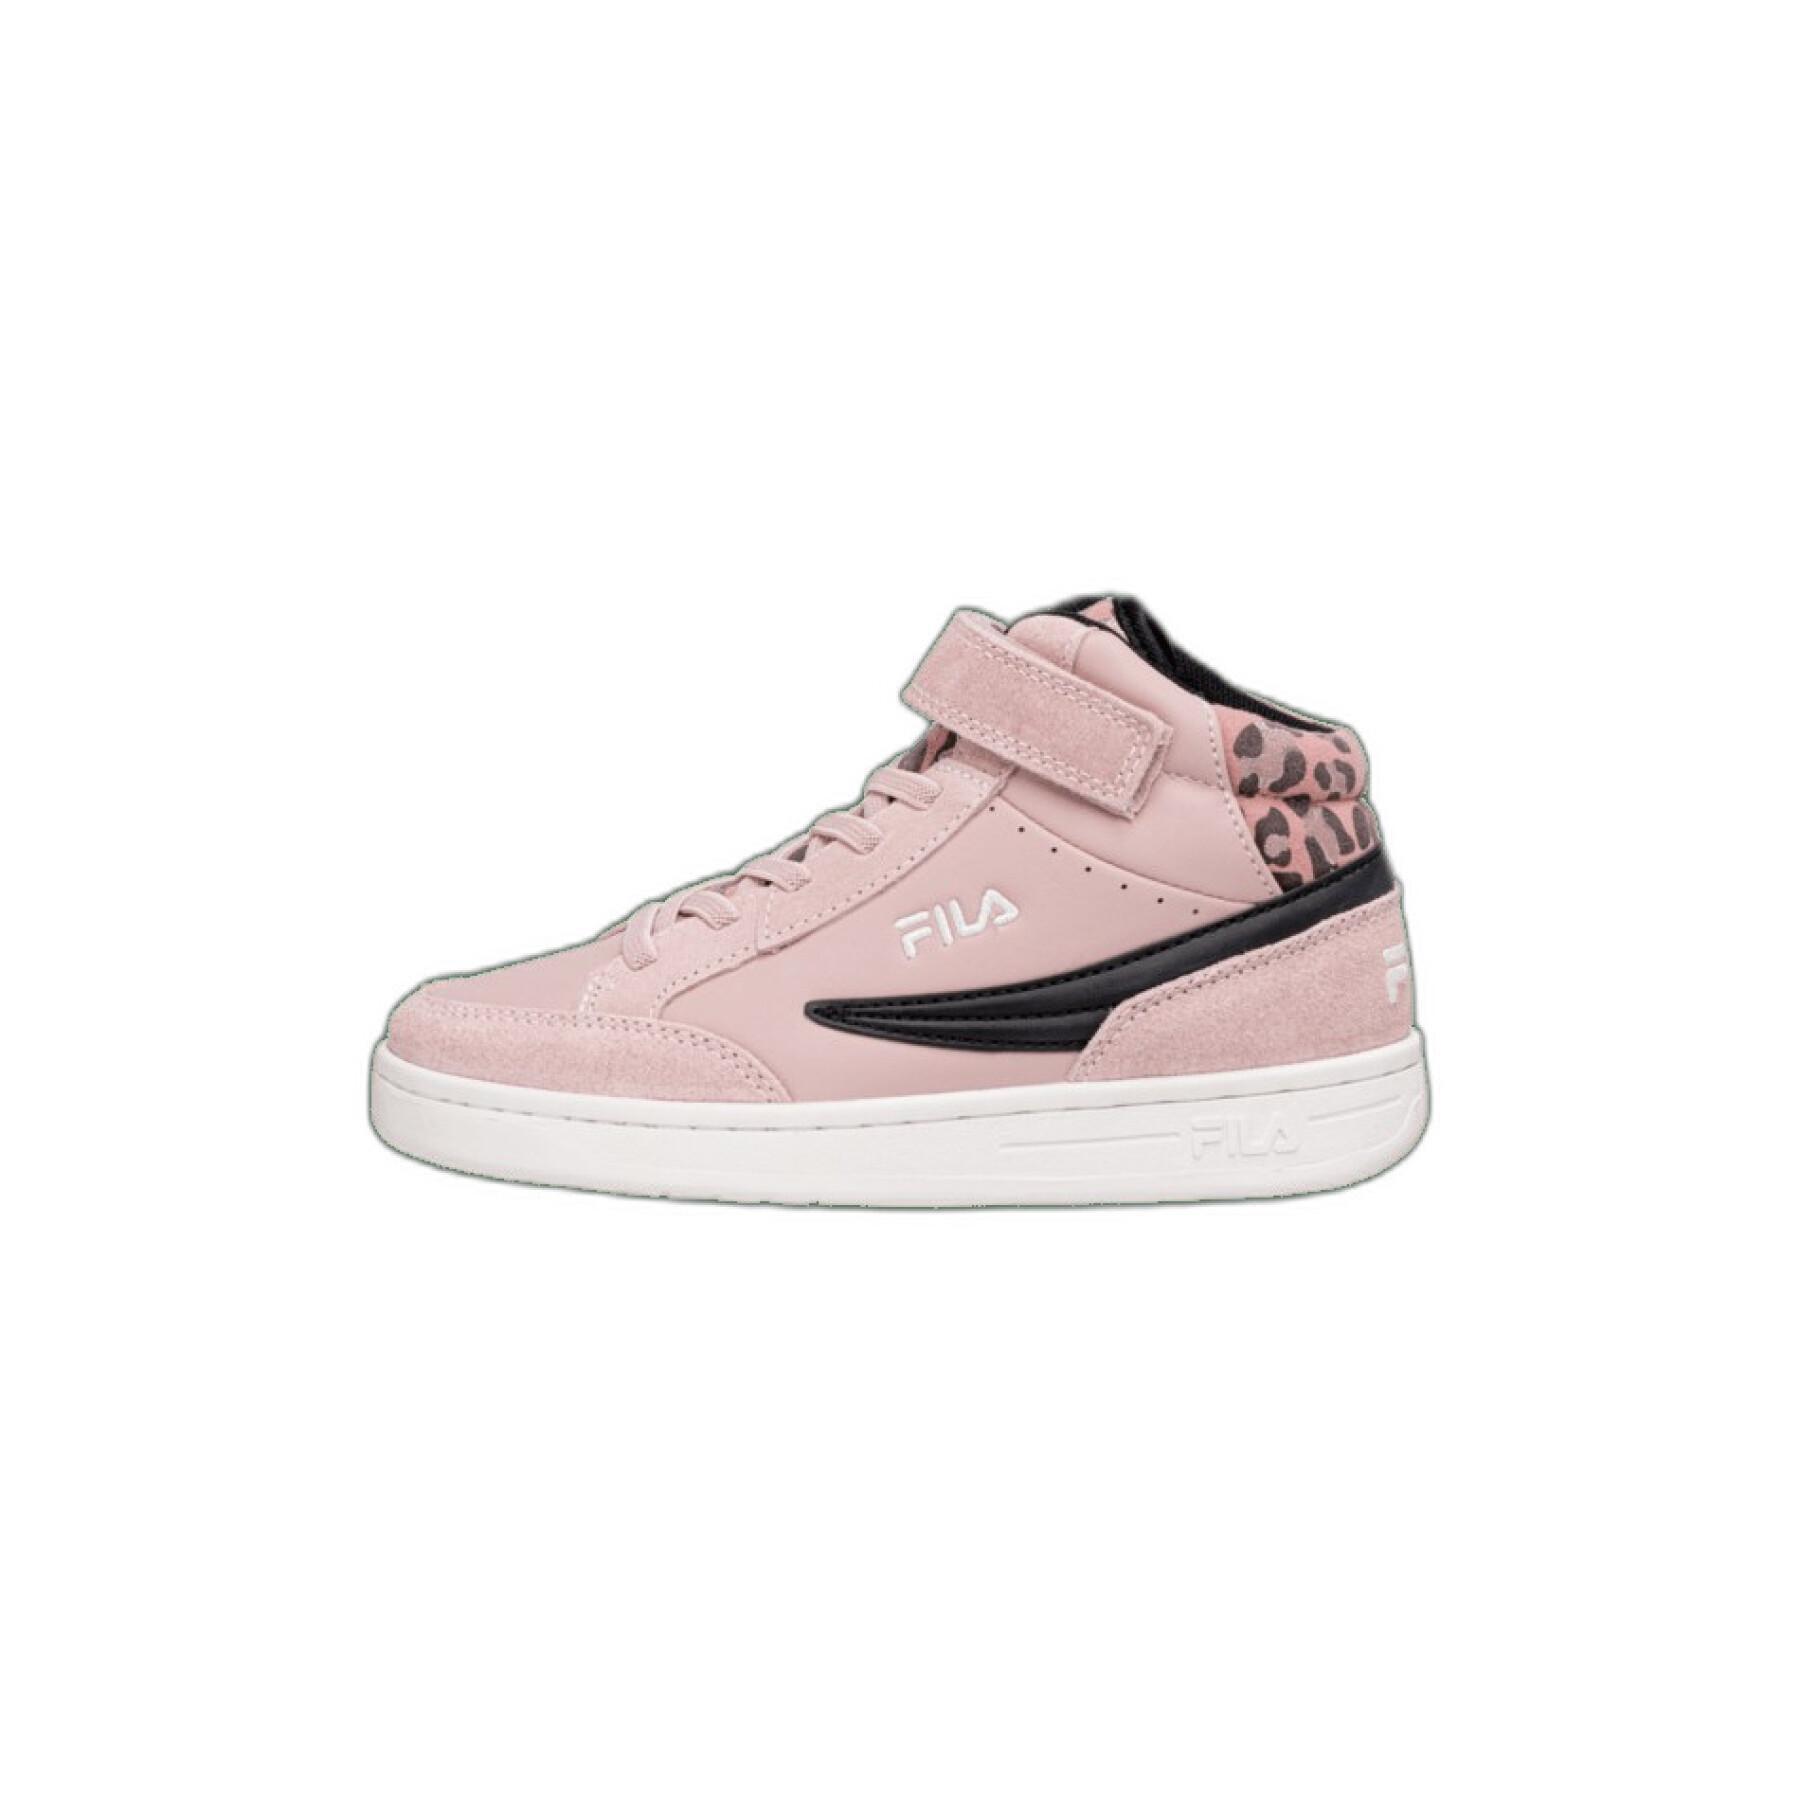 Children\'s sneakers Fila Crew - Lifestyle - Fila - Velcro Brands Mid